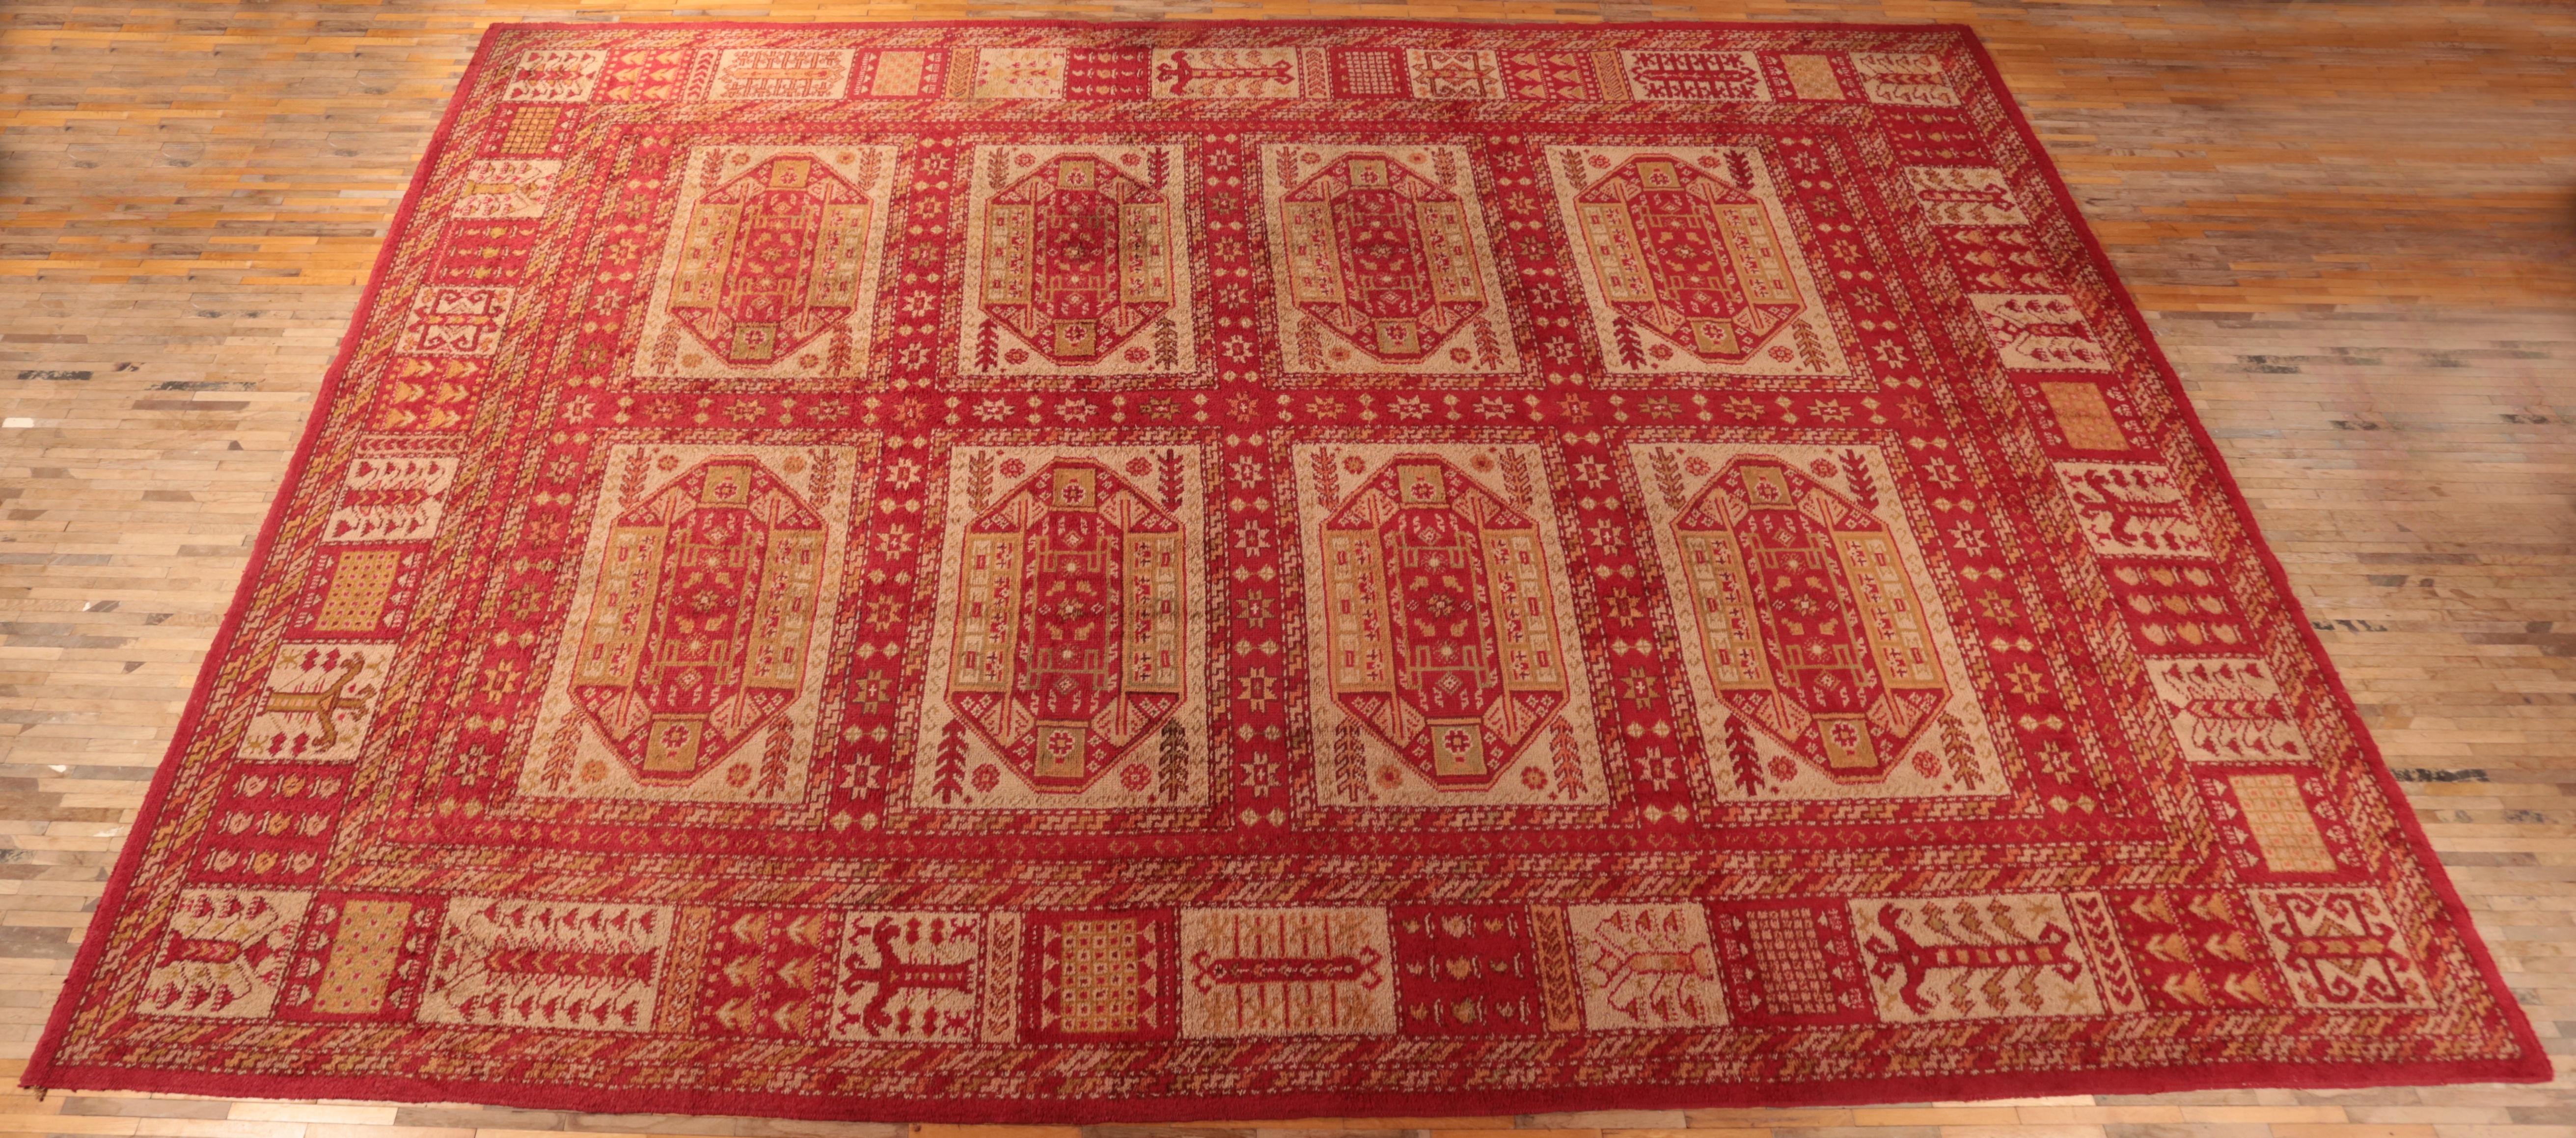 Hand-Knotted Antique Palace Turkish Ushak Carpet 555 X 375 cm For Sale